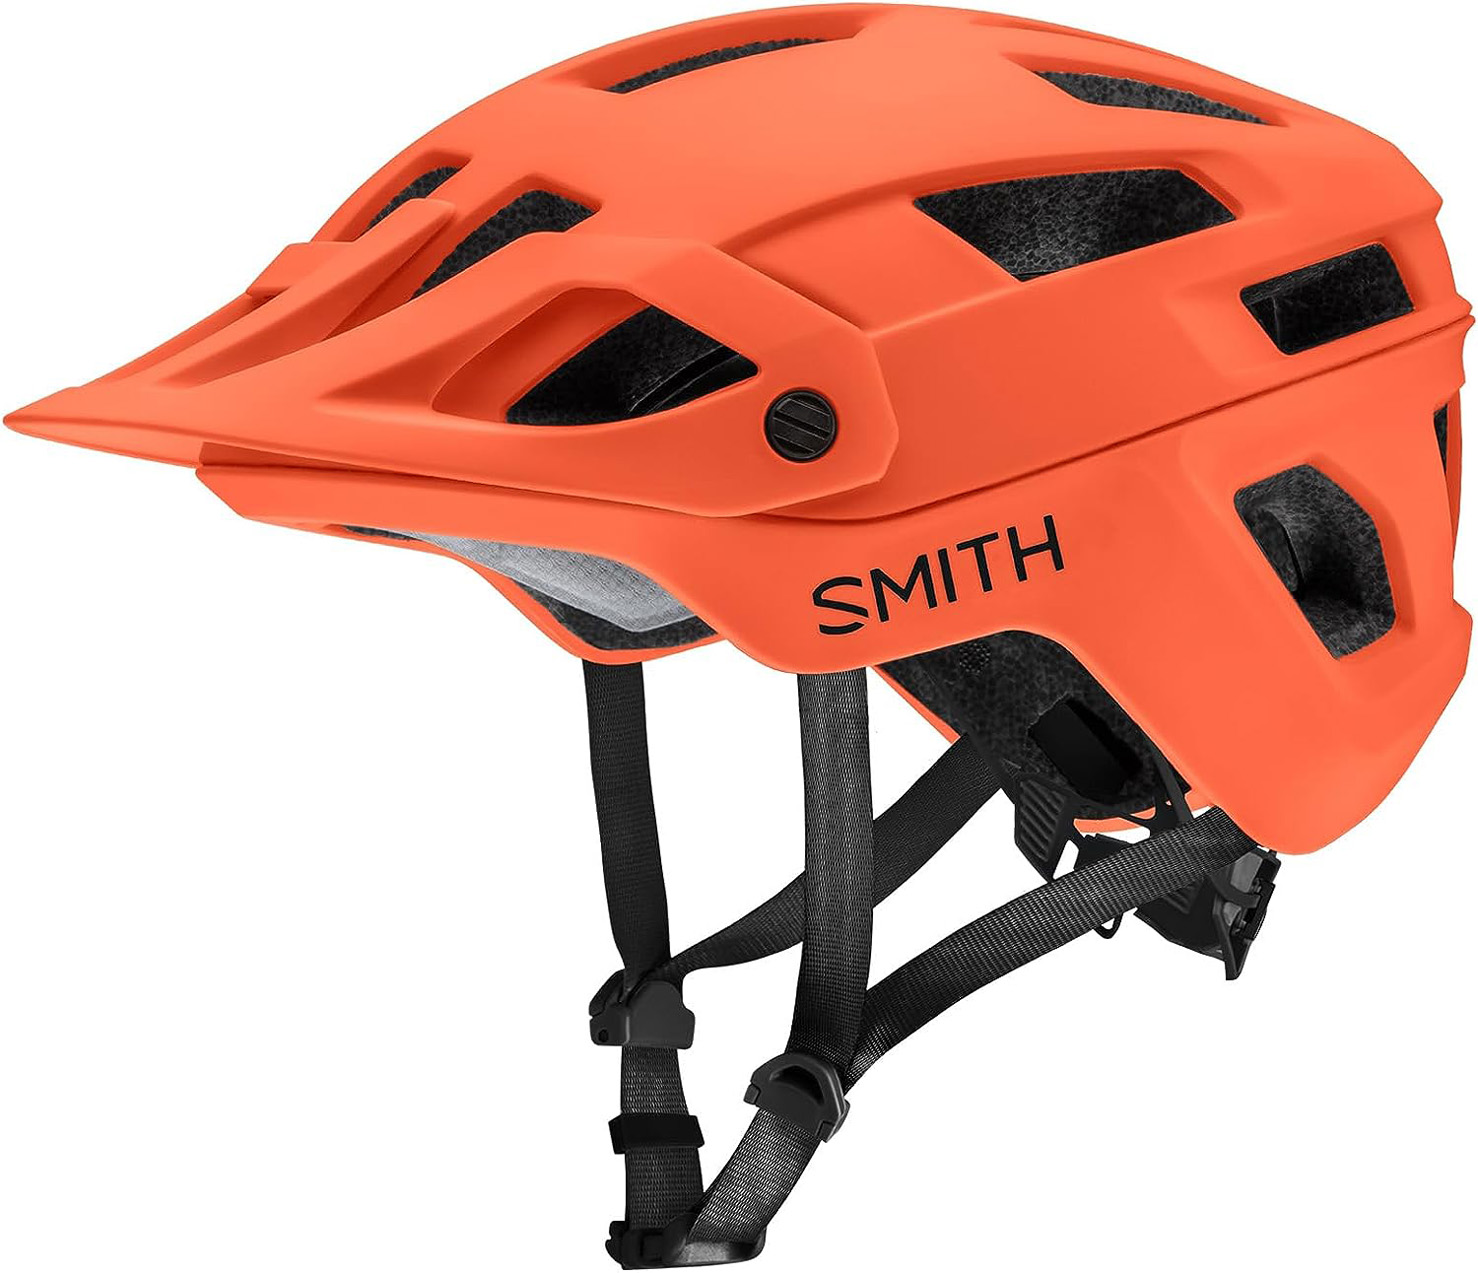 SMITH Engage MIPS Mountain Cycling Helmet – Matte Cinder – Medium